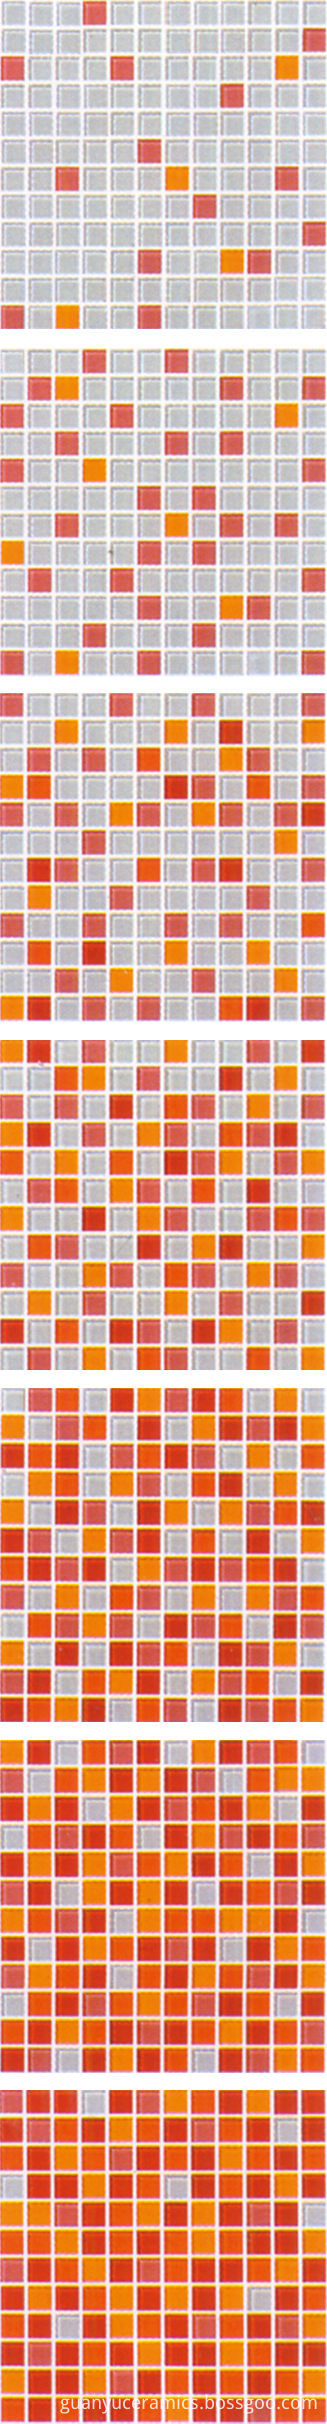 Orange Gradual Change Glass Mosaic